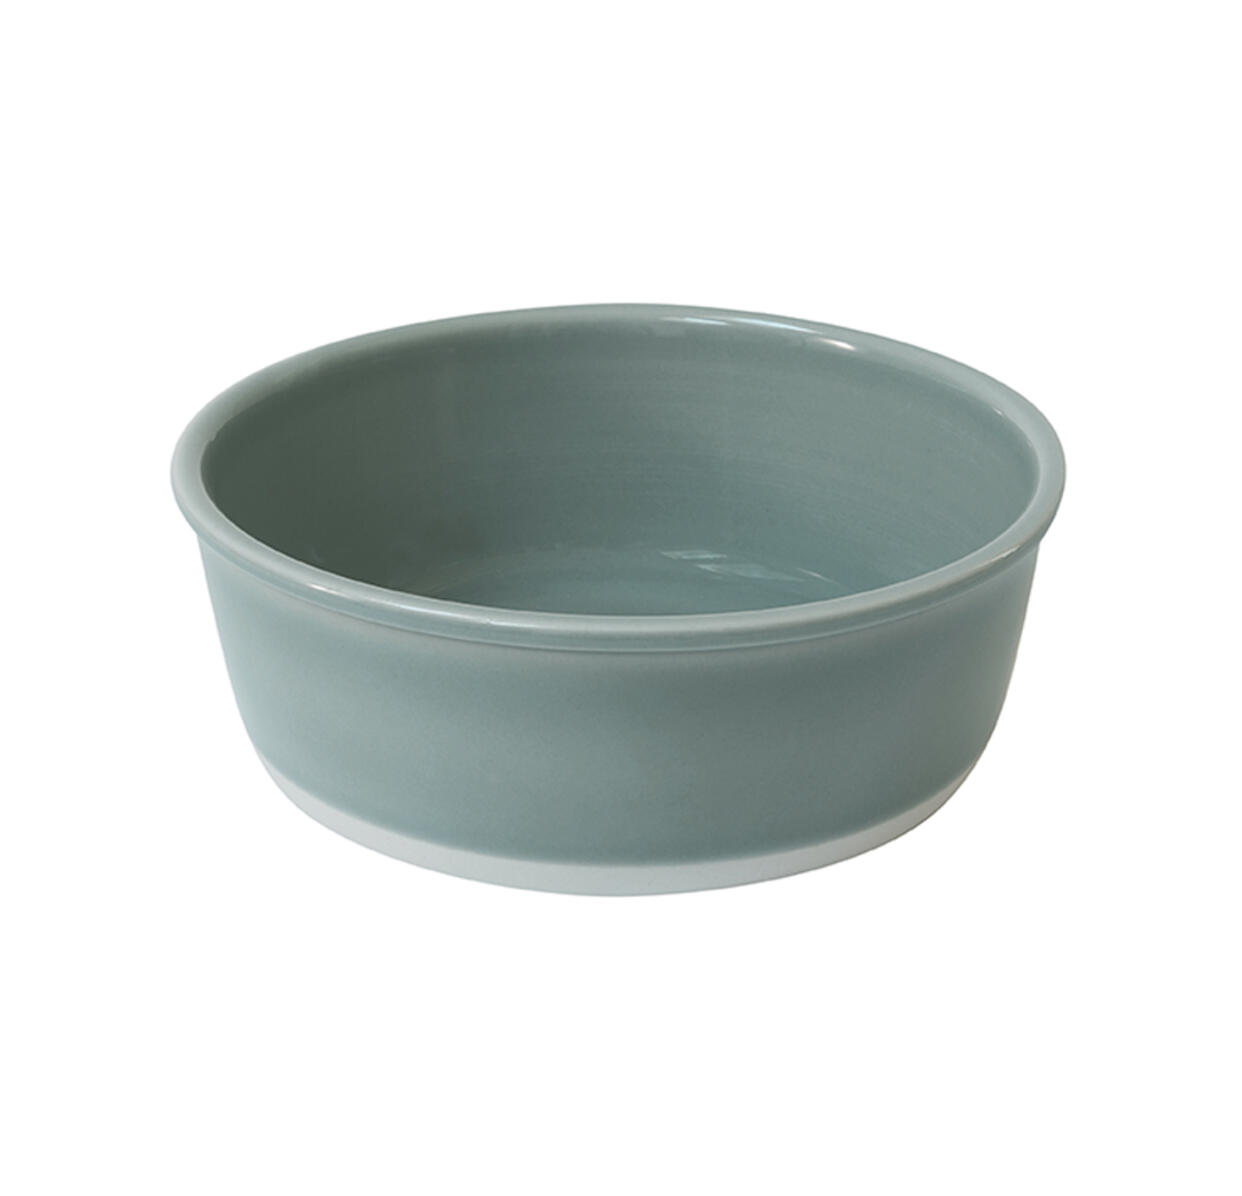 serving bowl cantine gris oxyde ceramic manufacturer